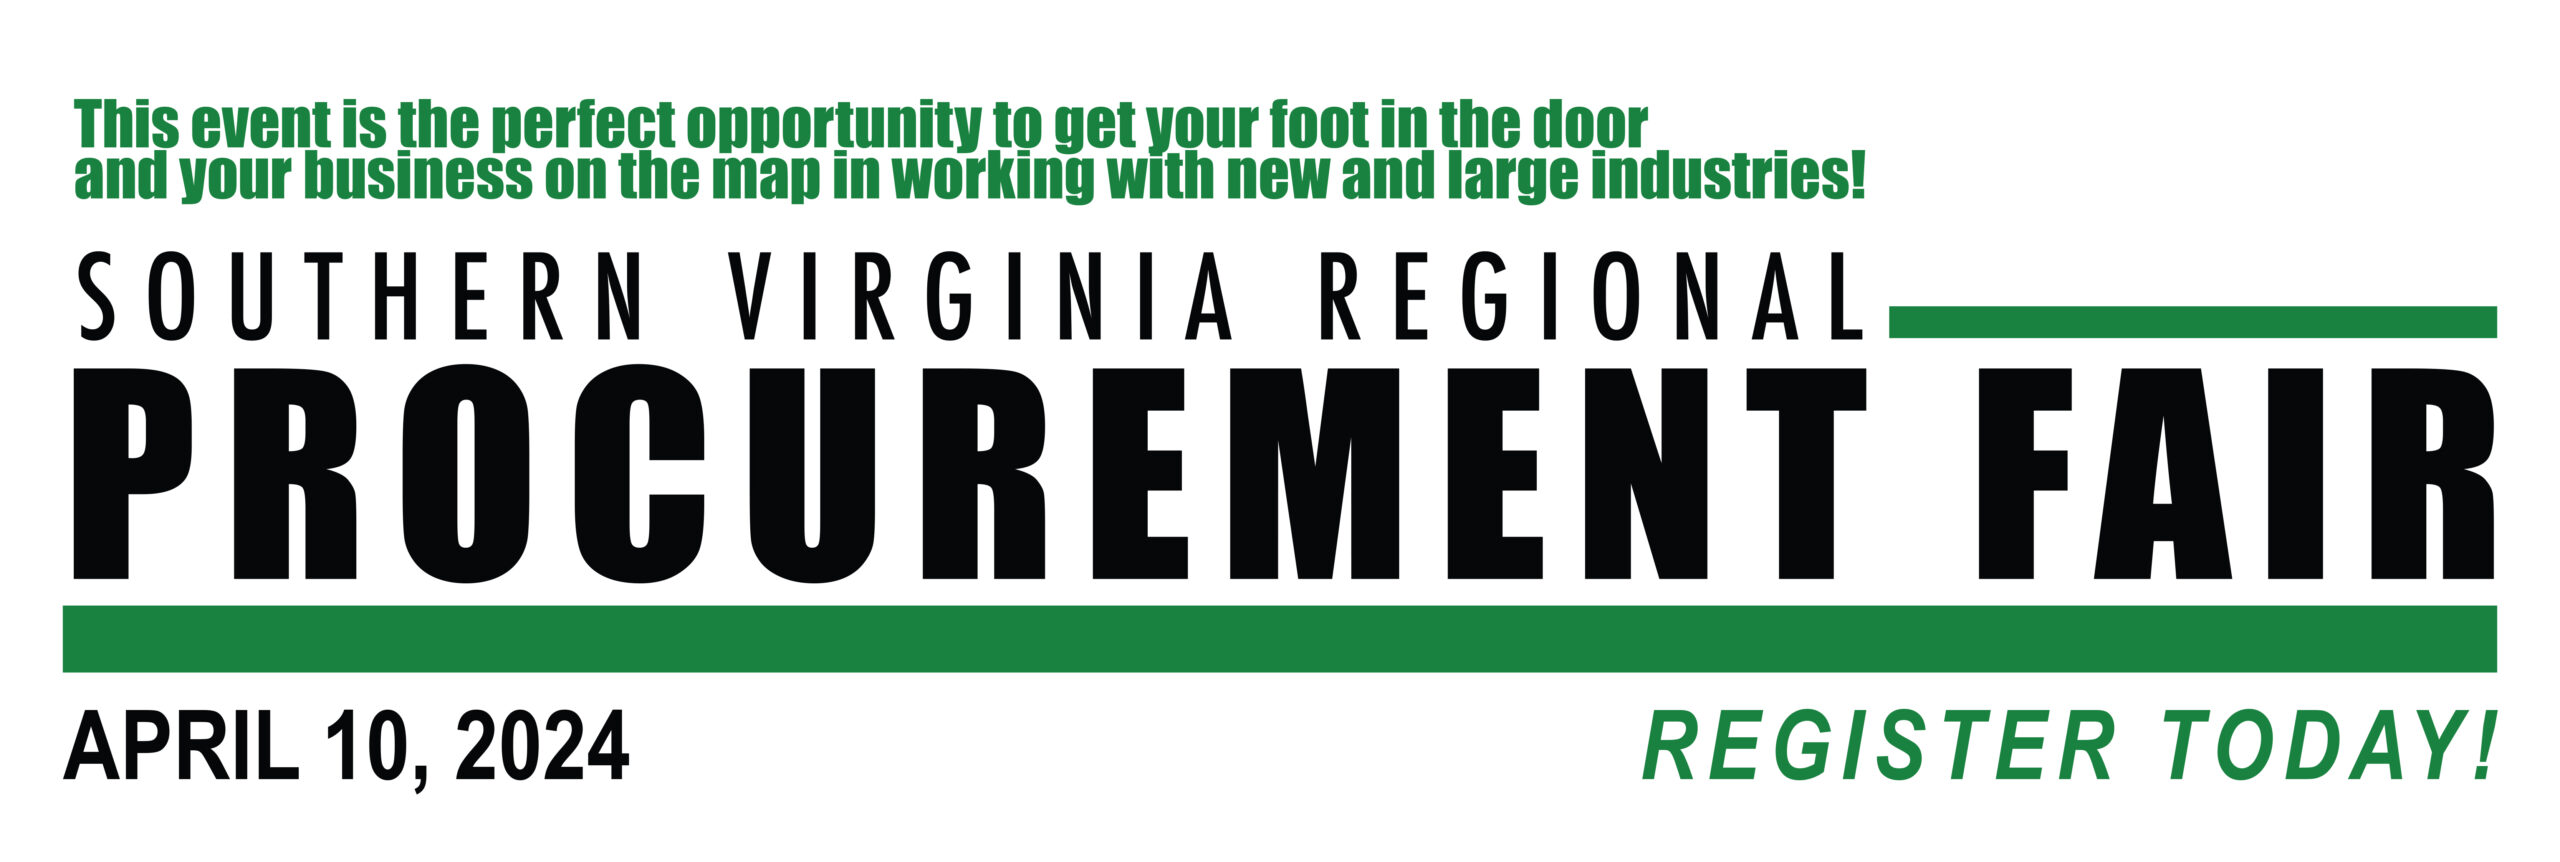 southern virginia procurement fair attendee image